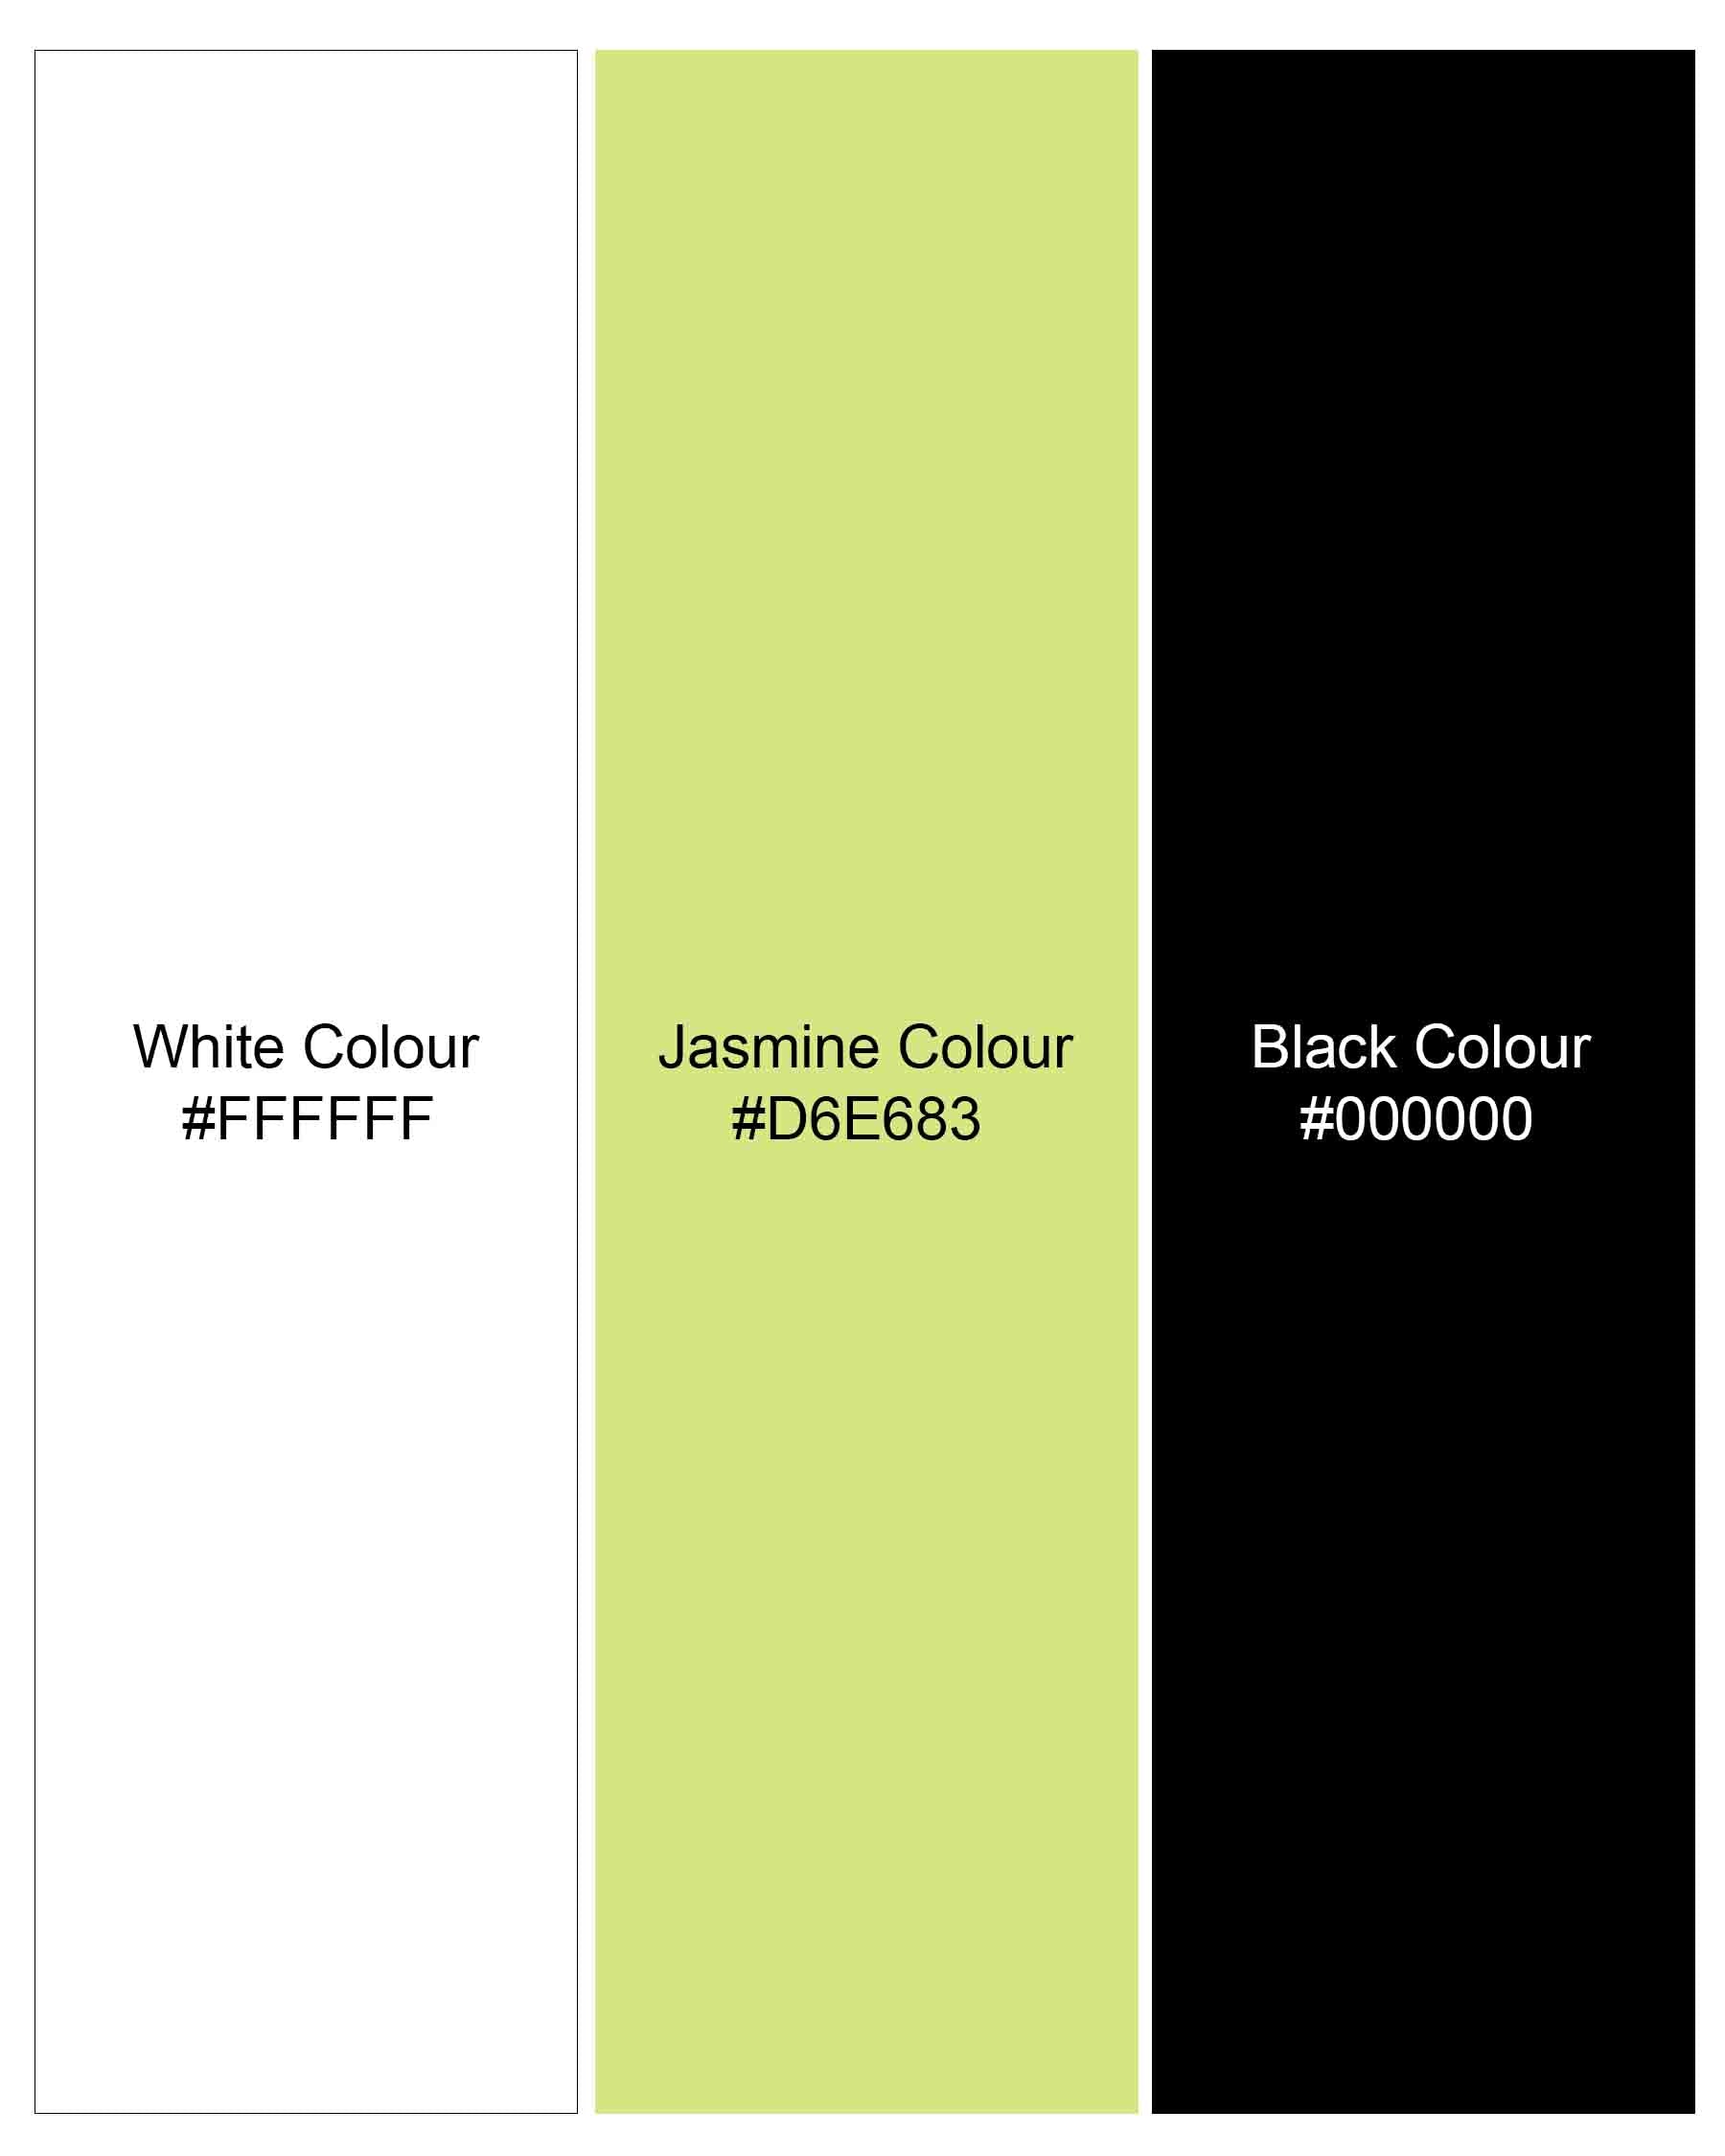 White And Jasmine Green Paisley Printed Premium Cotton Shirt 7797-38, 7797-H-38, 7797-39,7797-H-39, 7797-40, 7797-H-40, 7797-42, 7797-H-42, 7797-44, 7797-H-44, 7797-46, 7797-H-46, 7797-48, 7797-H-48, 7797-50, 7797-H-50, 7797-52, 7797-H-52